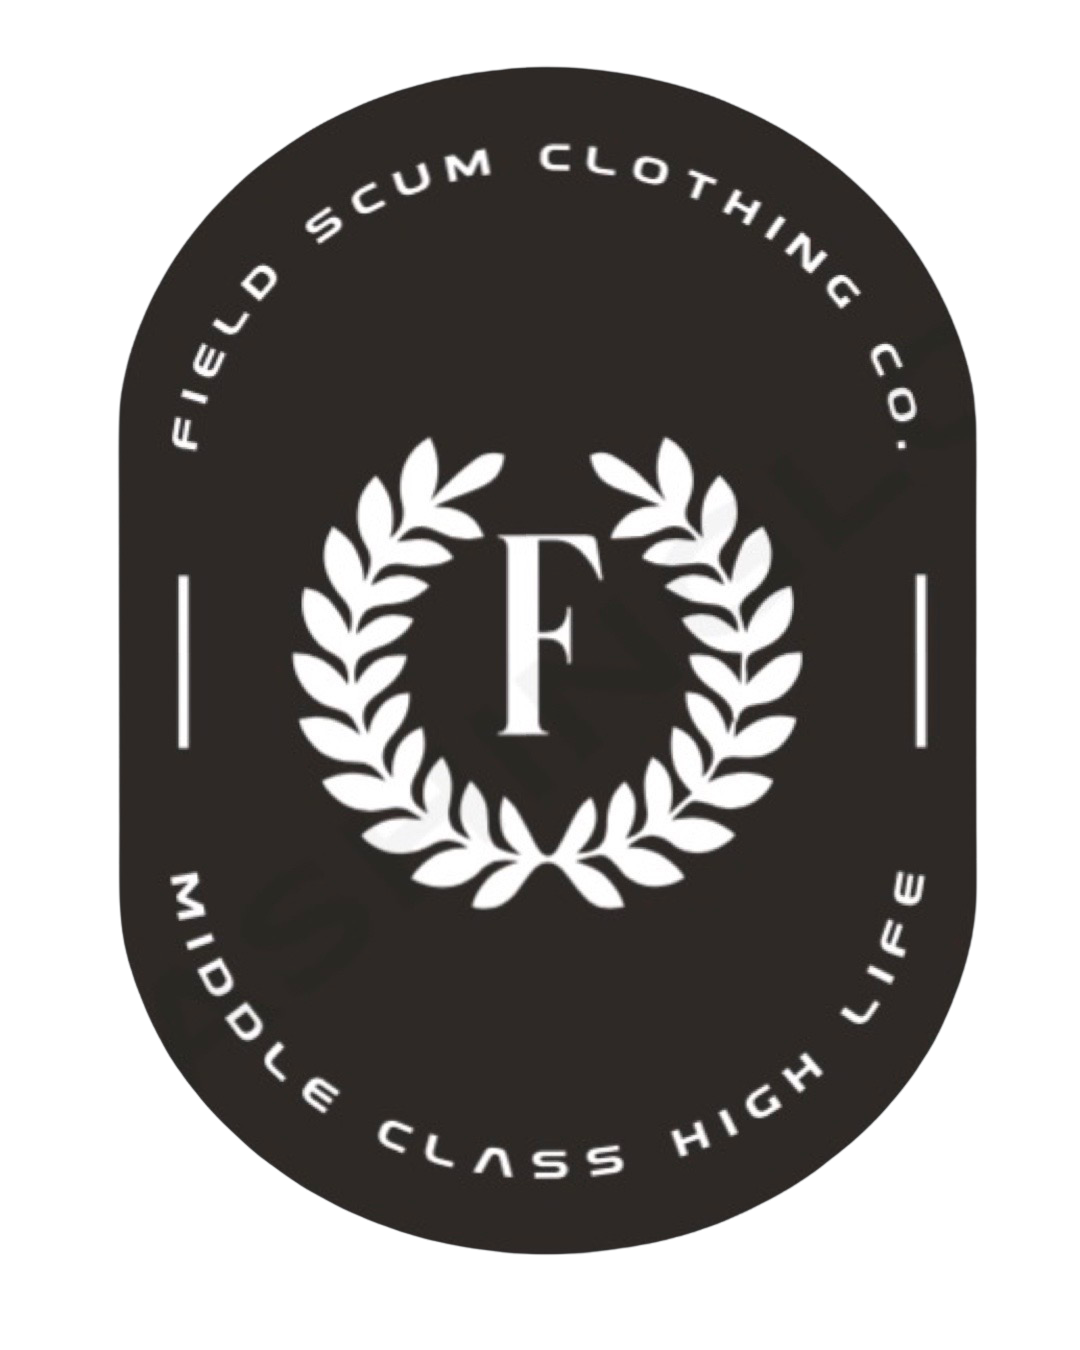 Field Scum Clothing Co.